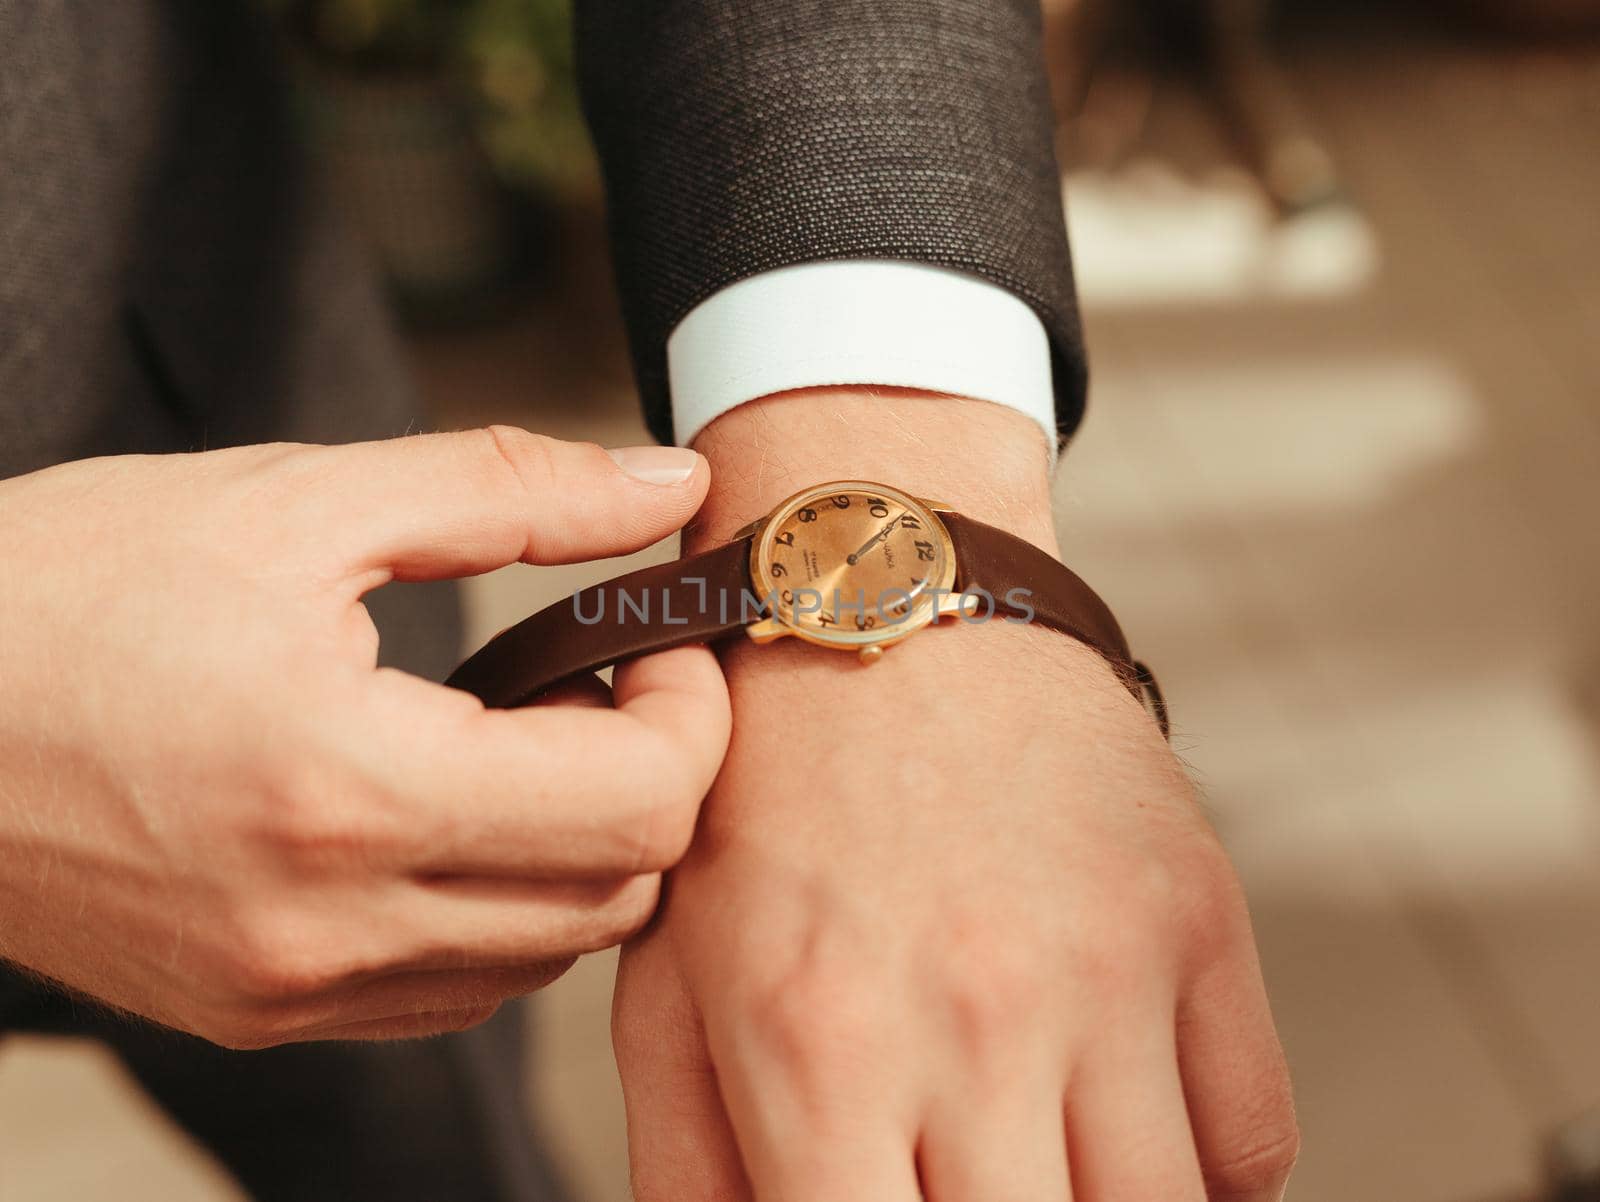 Businessman wearing the wristwatch. Grain effect. sunny